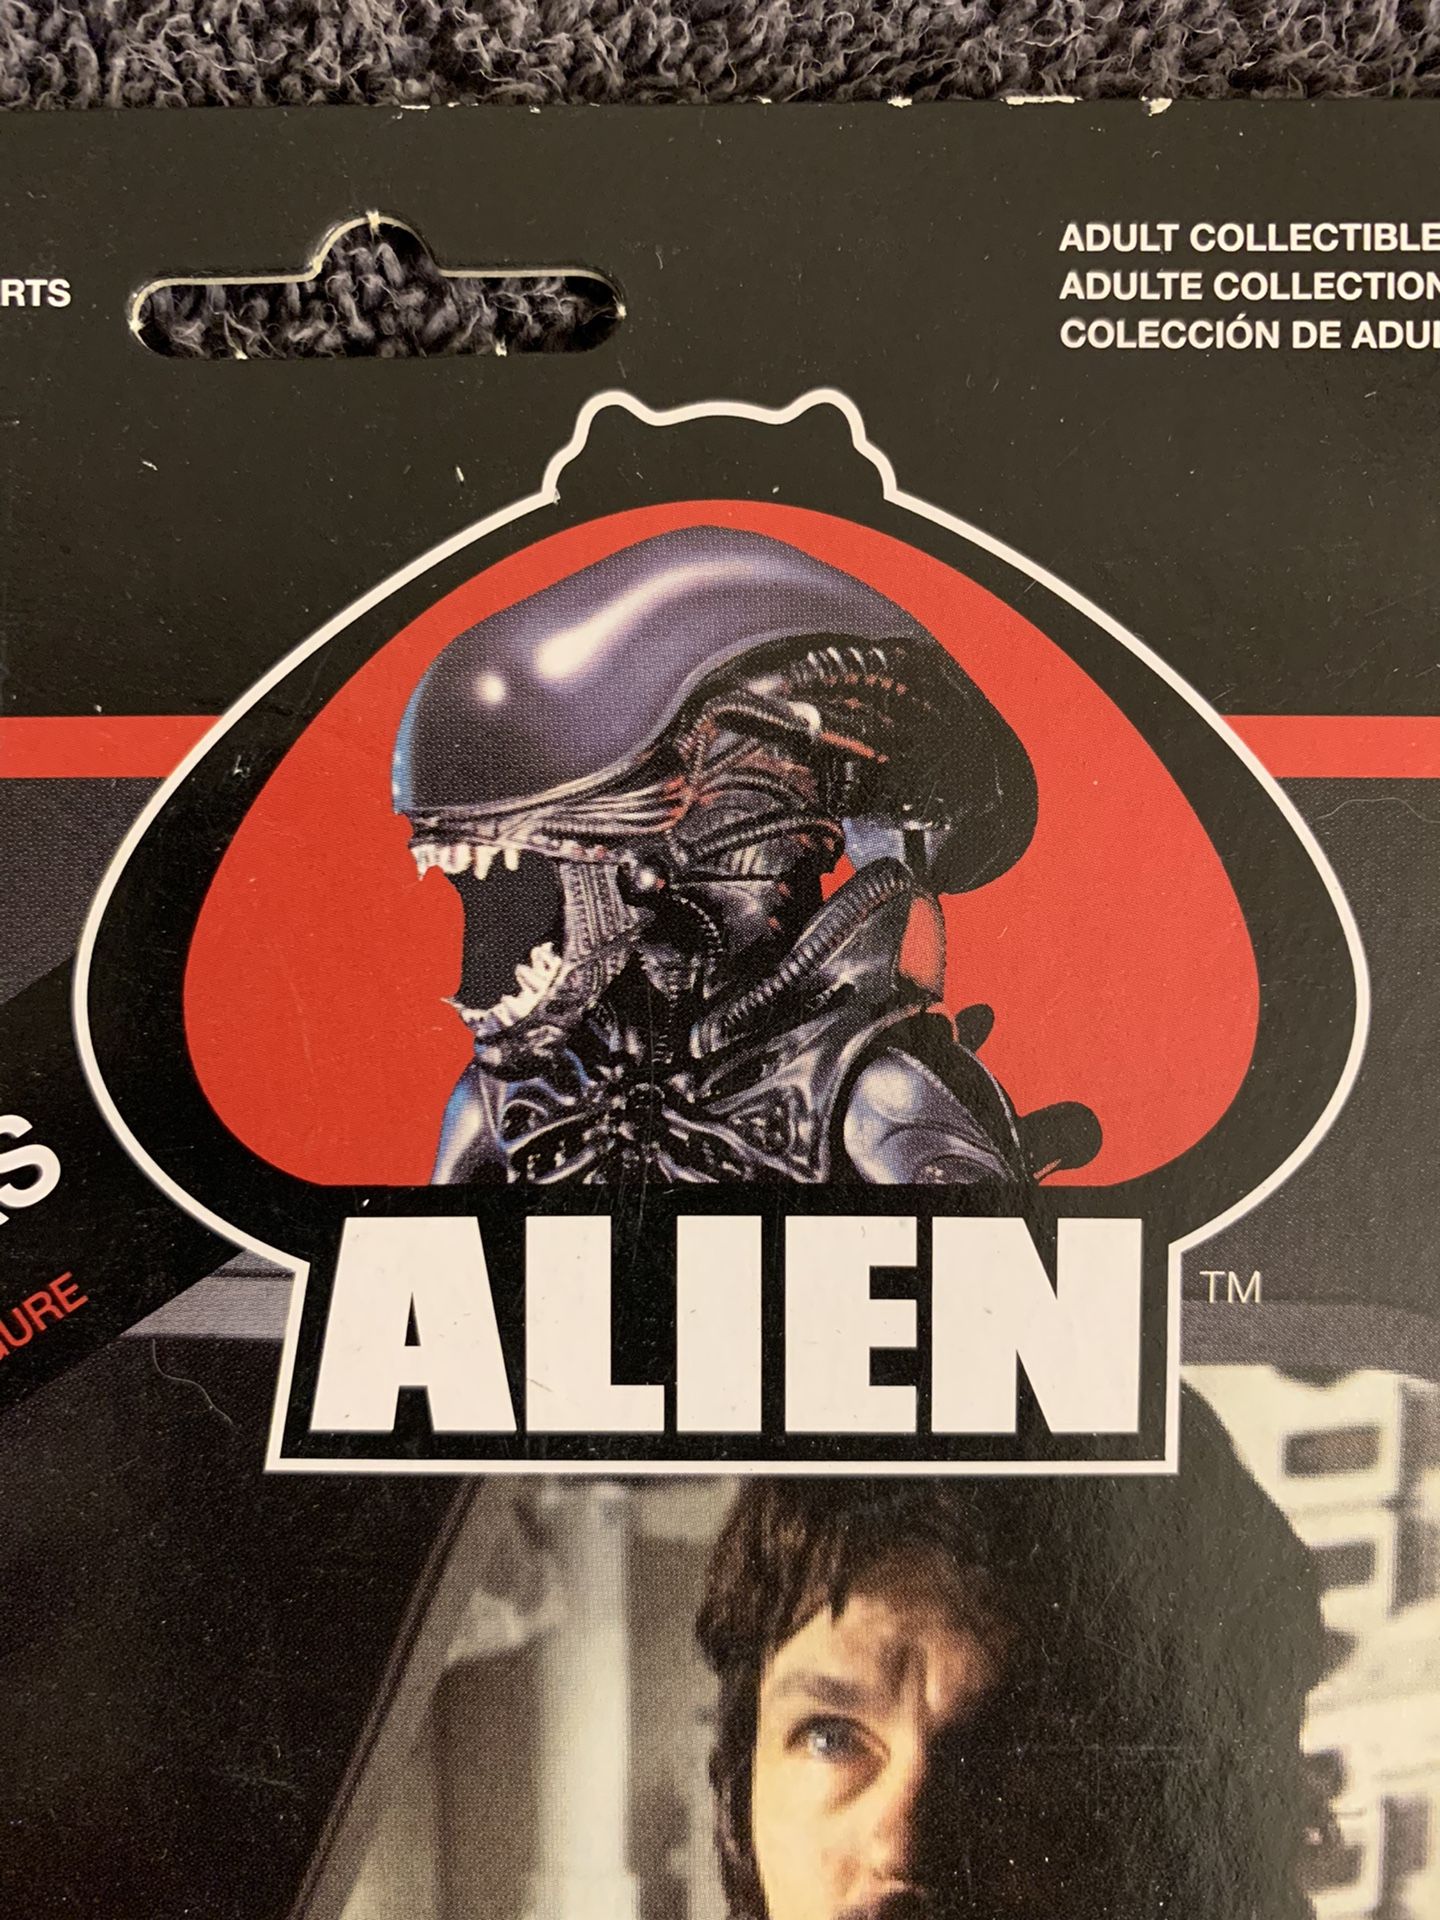 Alien Dallas figure by ReAction toys